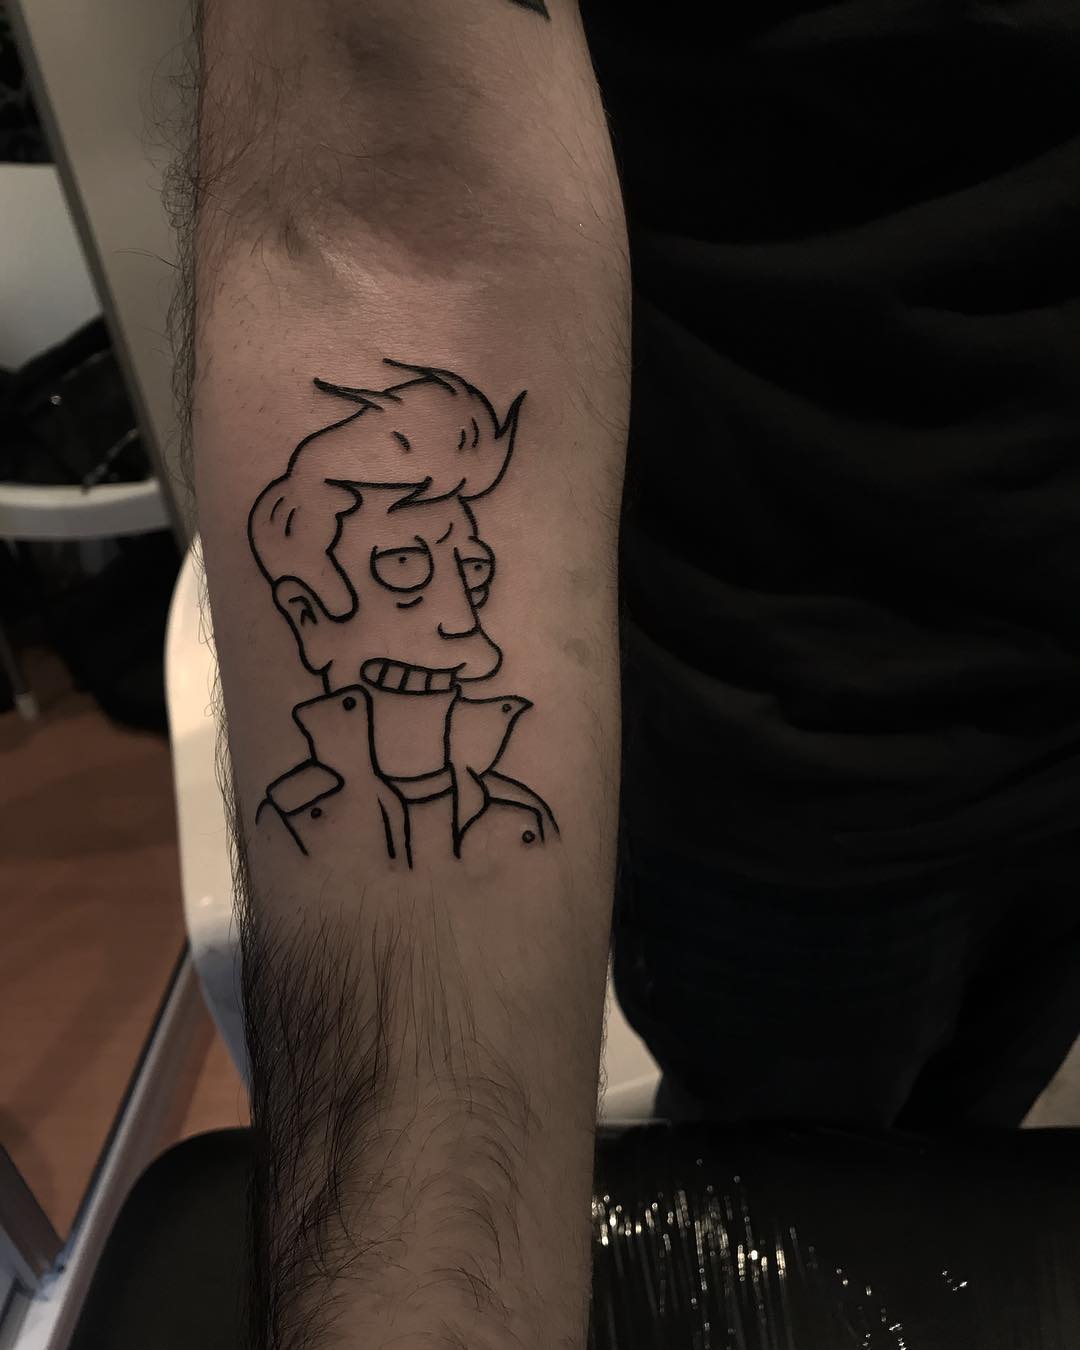 Seymour Skinner tattoo by @facundo.erpen